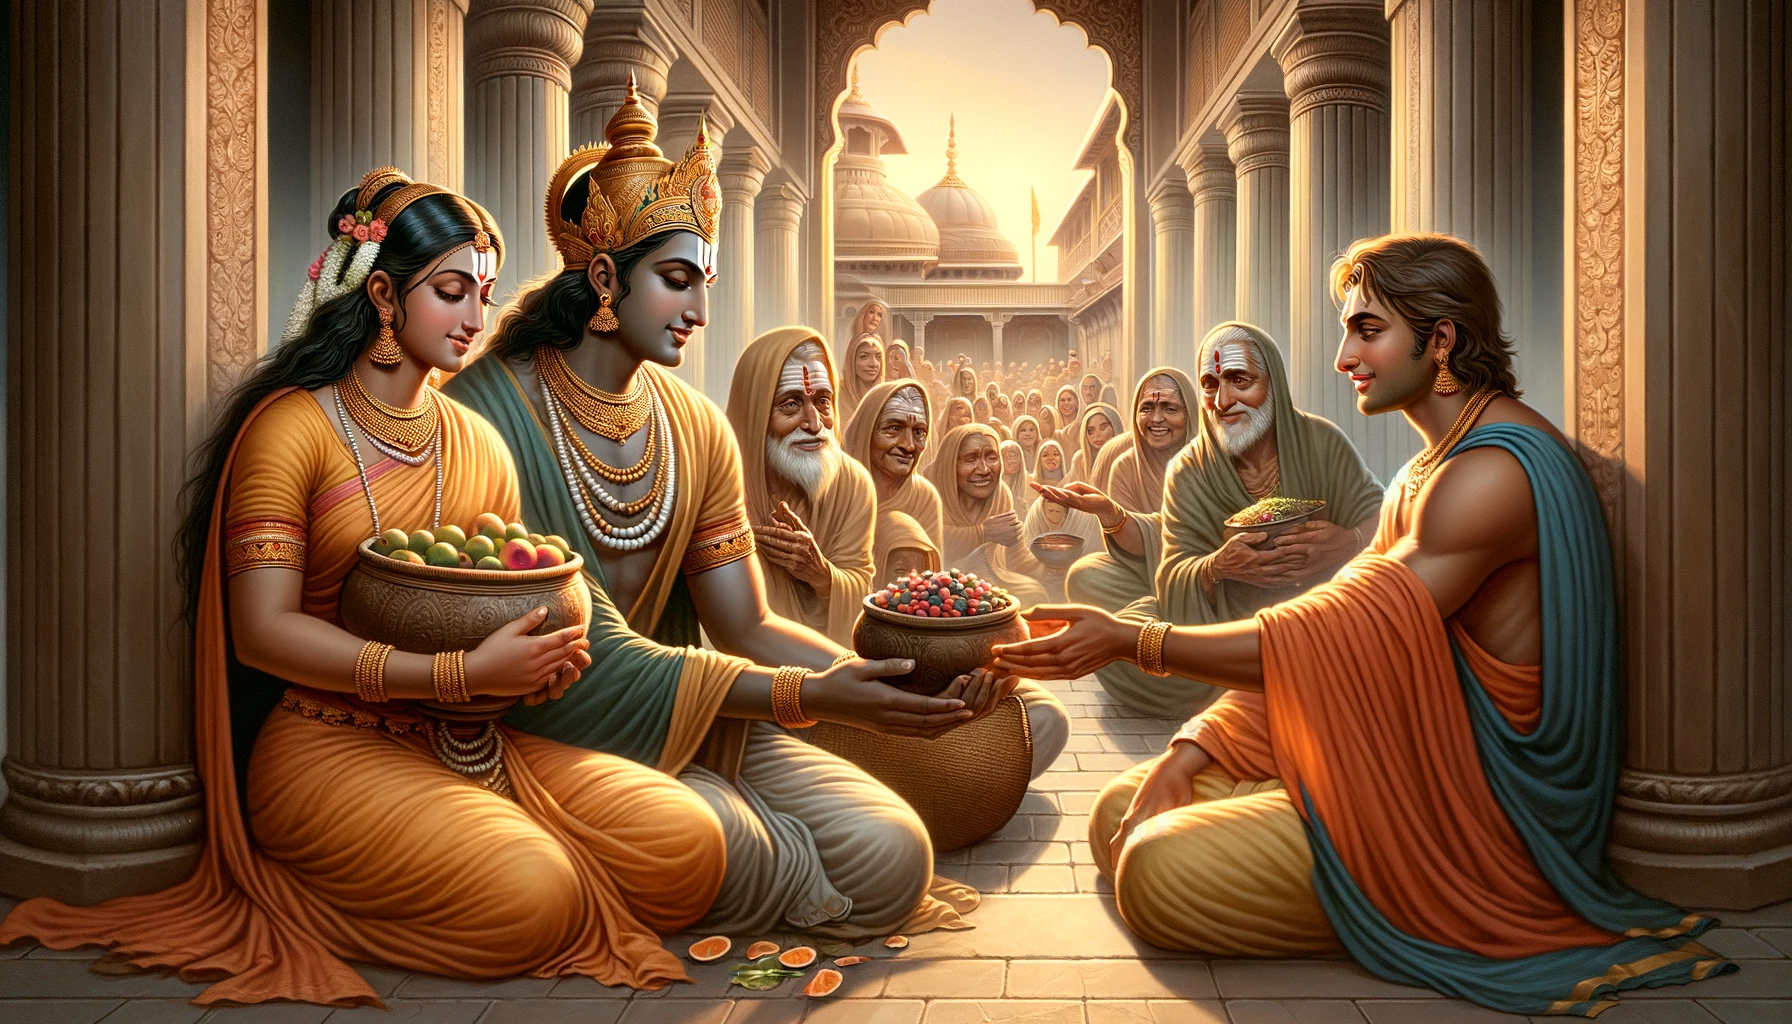 Sita, Rama and Lakshmana Give Away Their Wealth